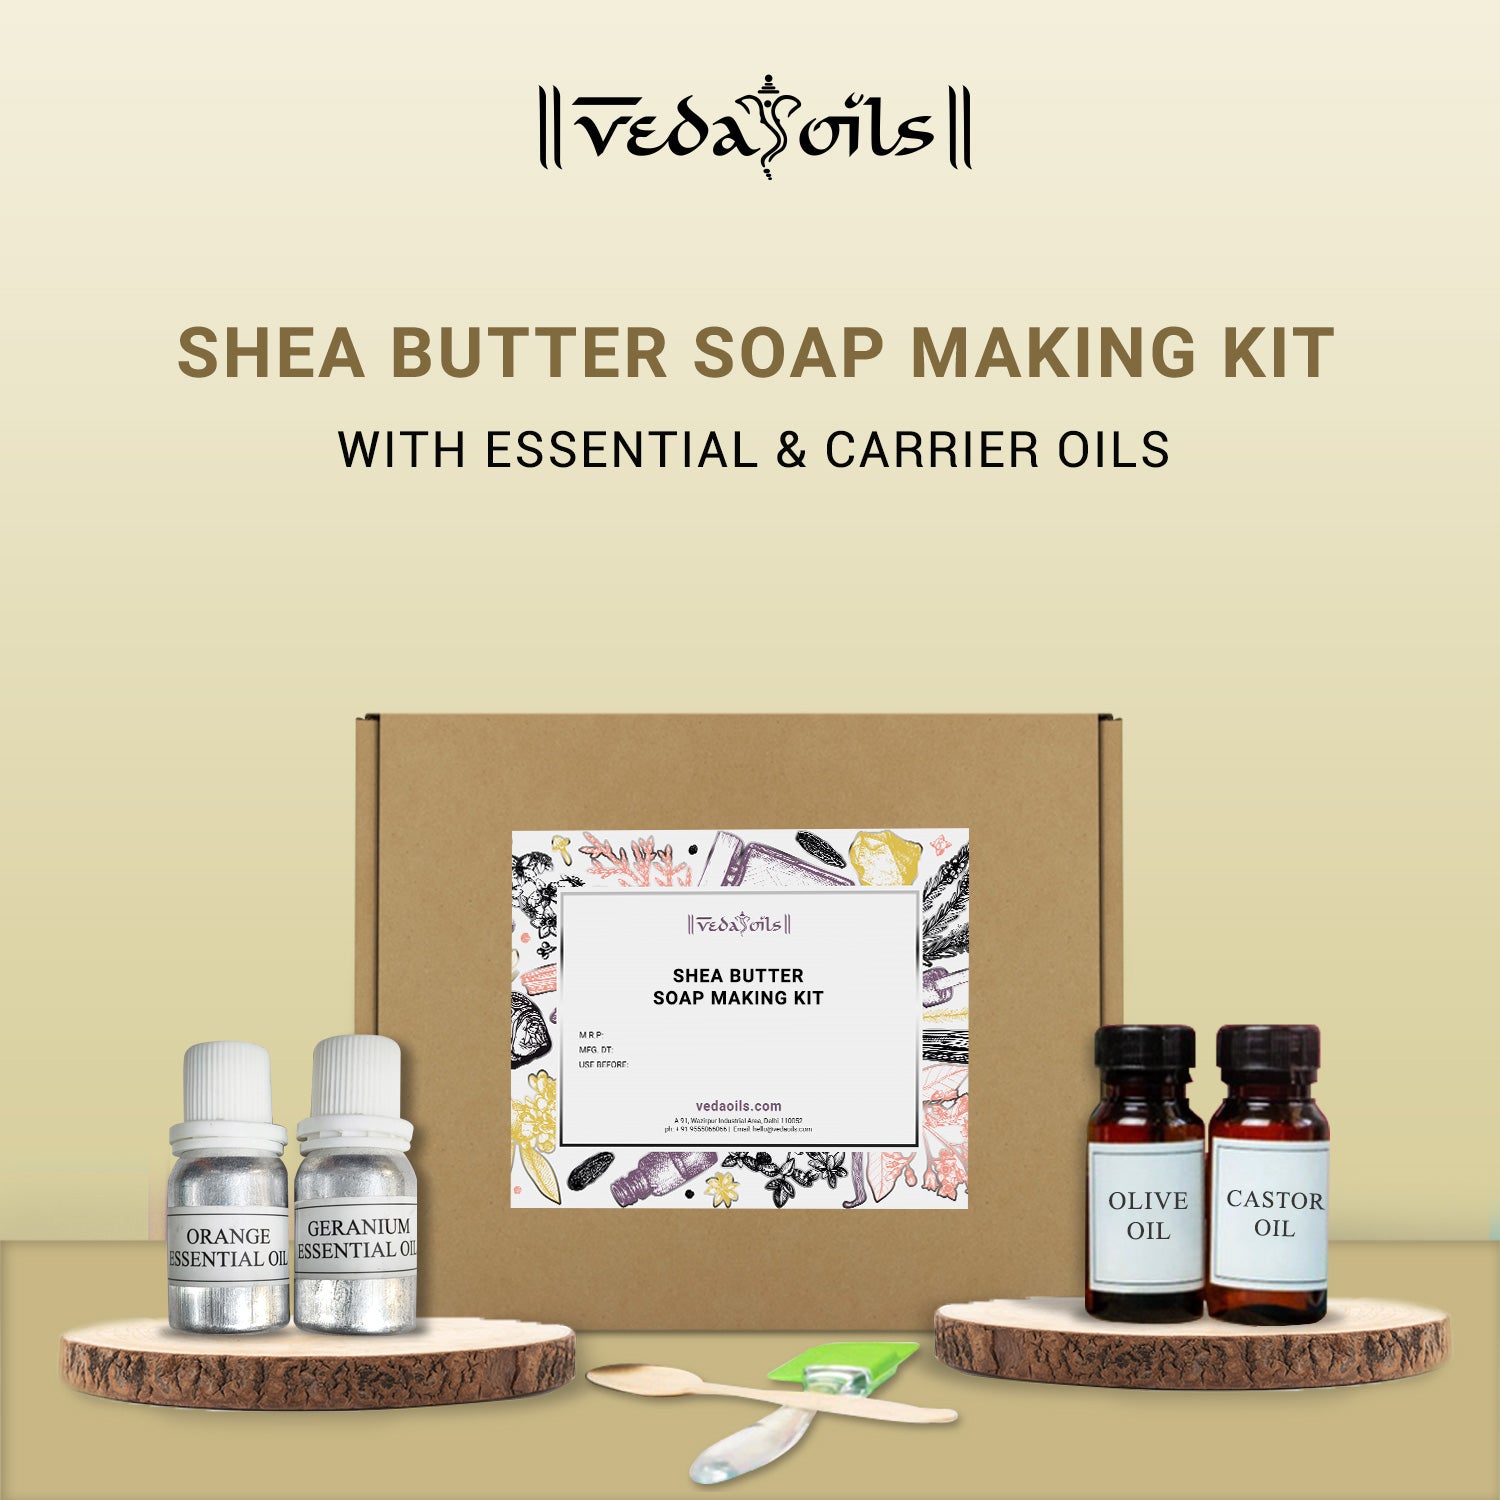 Melt & Pour Natural Shea Butter Soap Making Kit at Rs 1199.00, Craft Kit